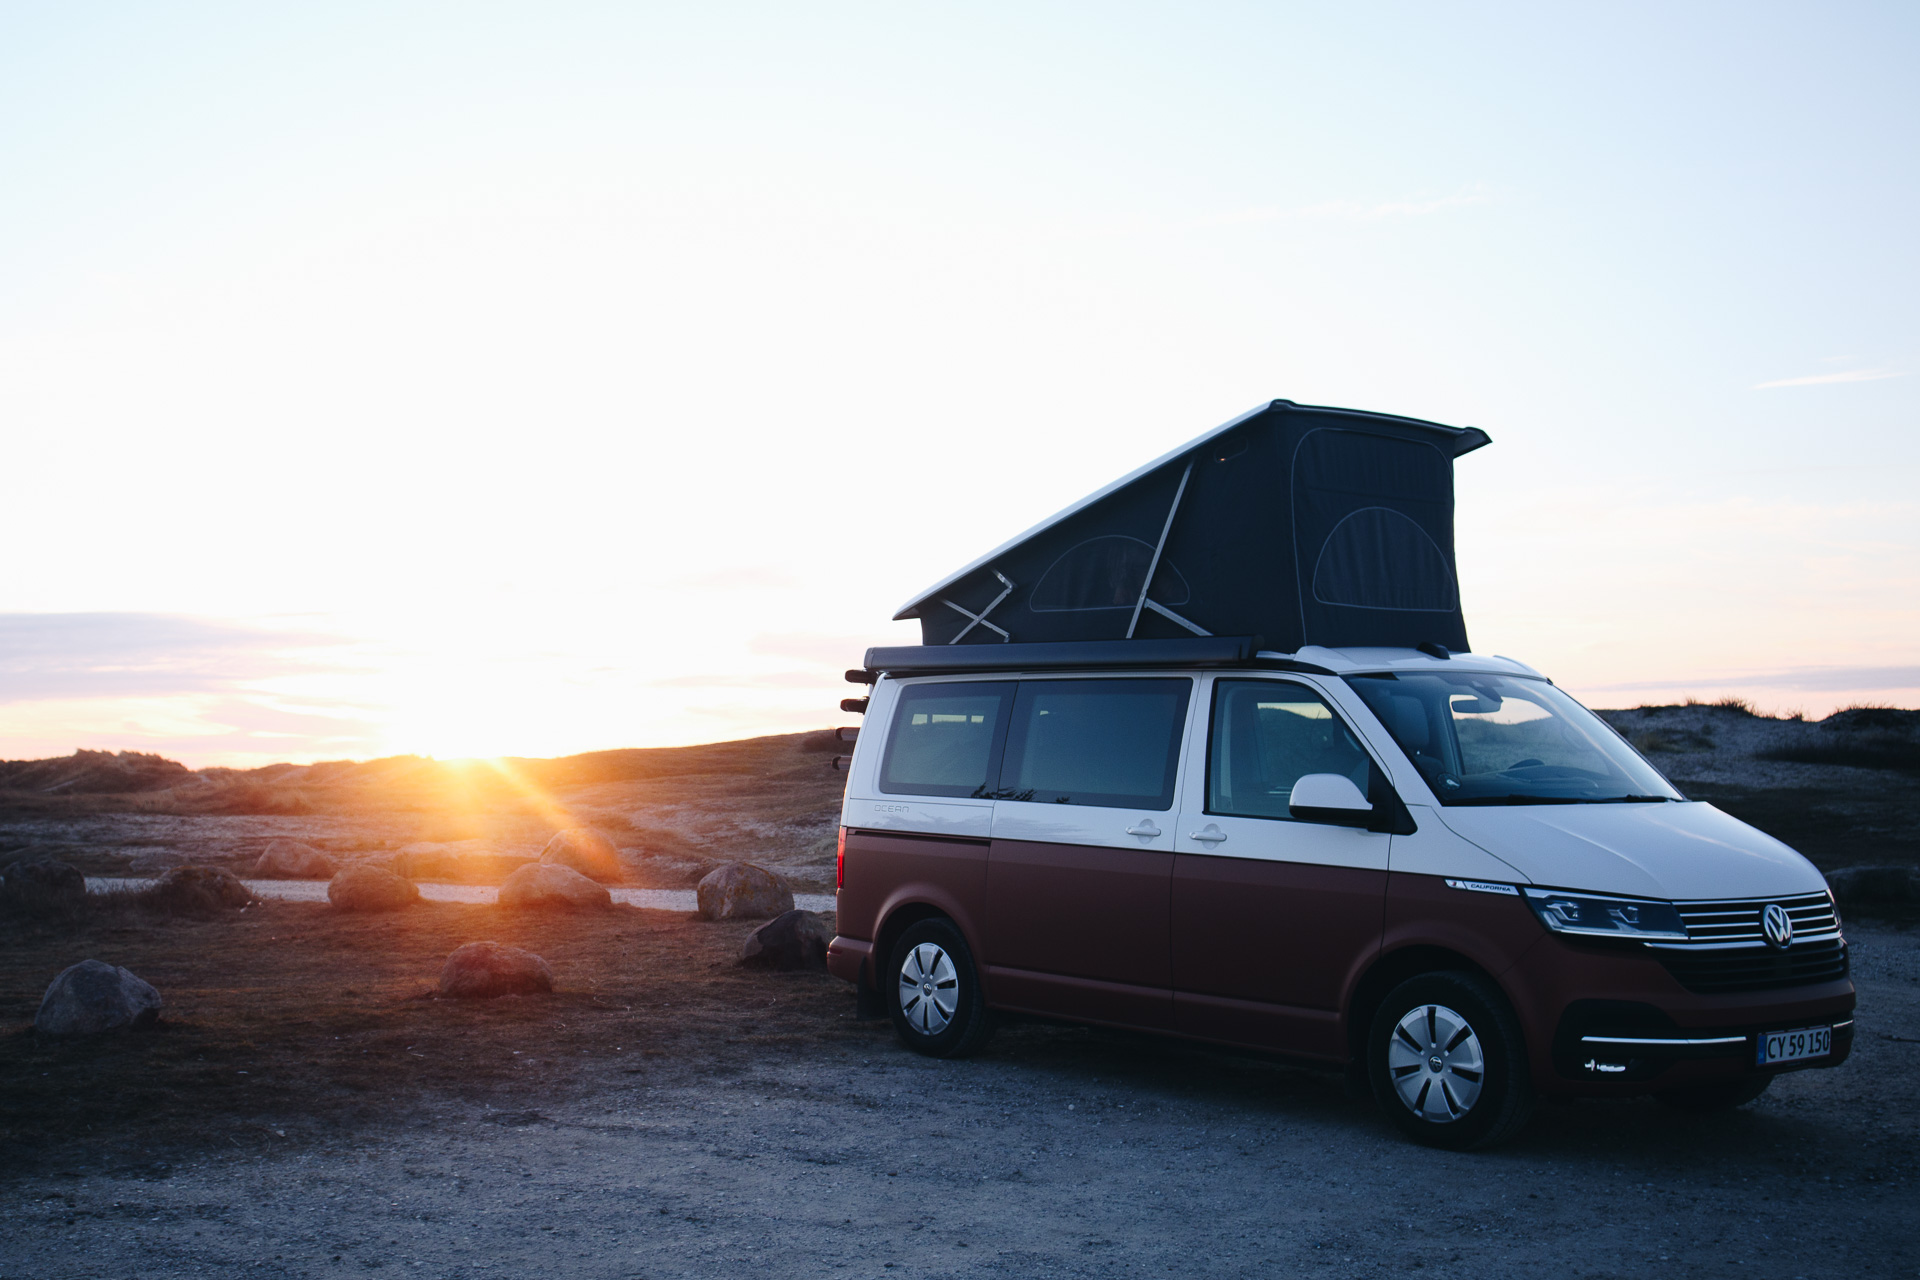 vw california campervan in sunset